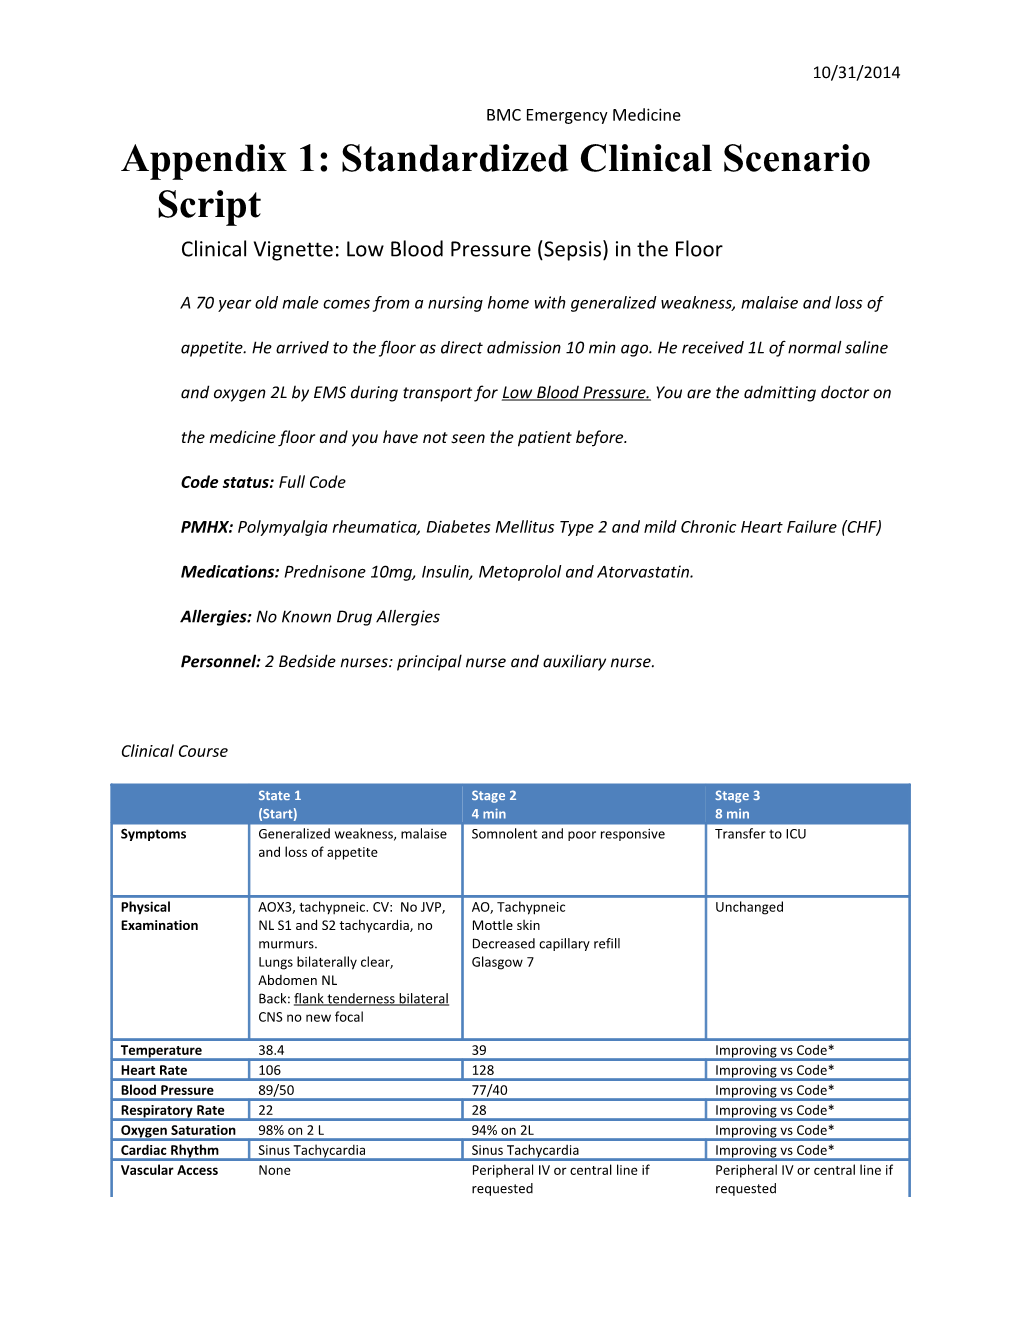 Appendix 1: Standardized Clinical Scenario Script